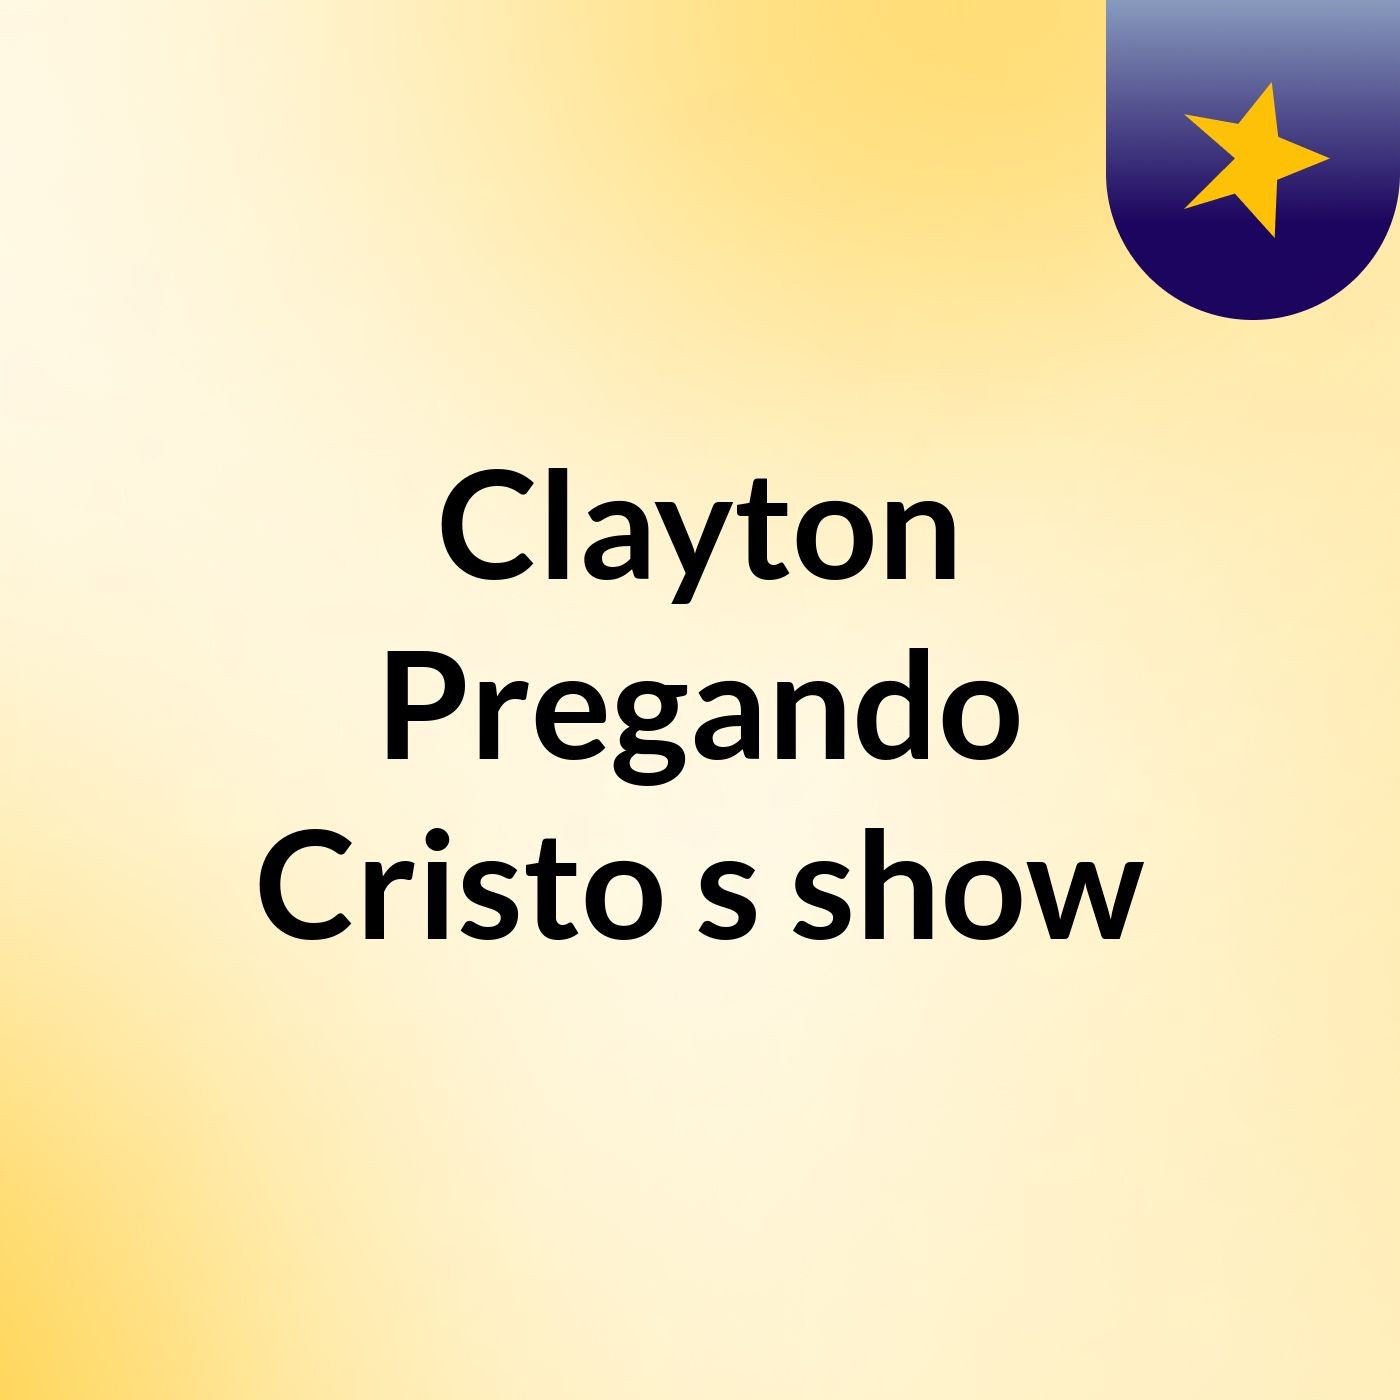 Clayton Pregando Cristo's show